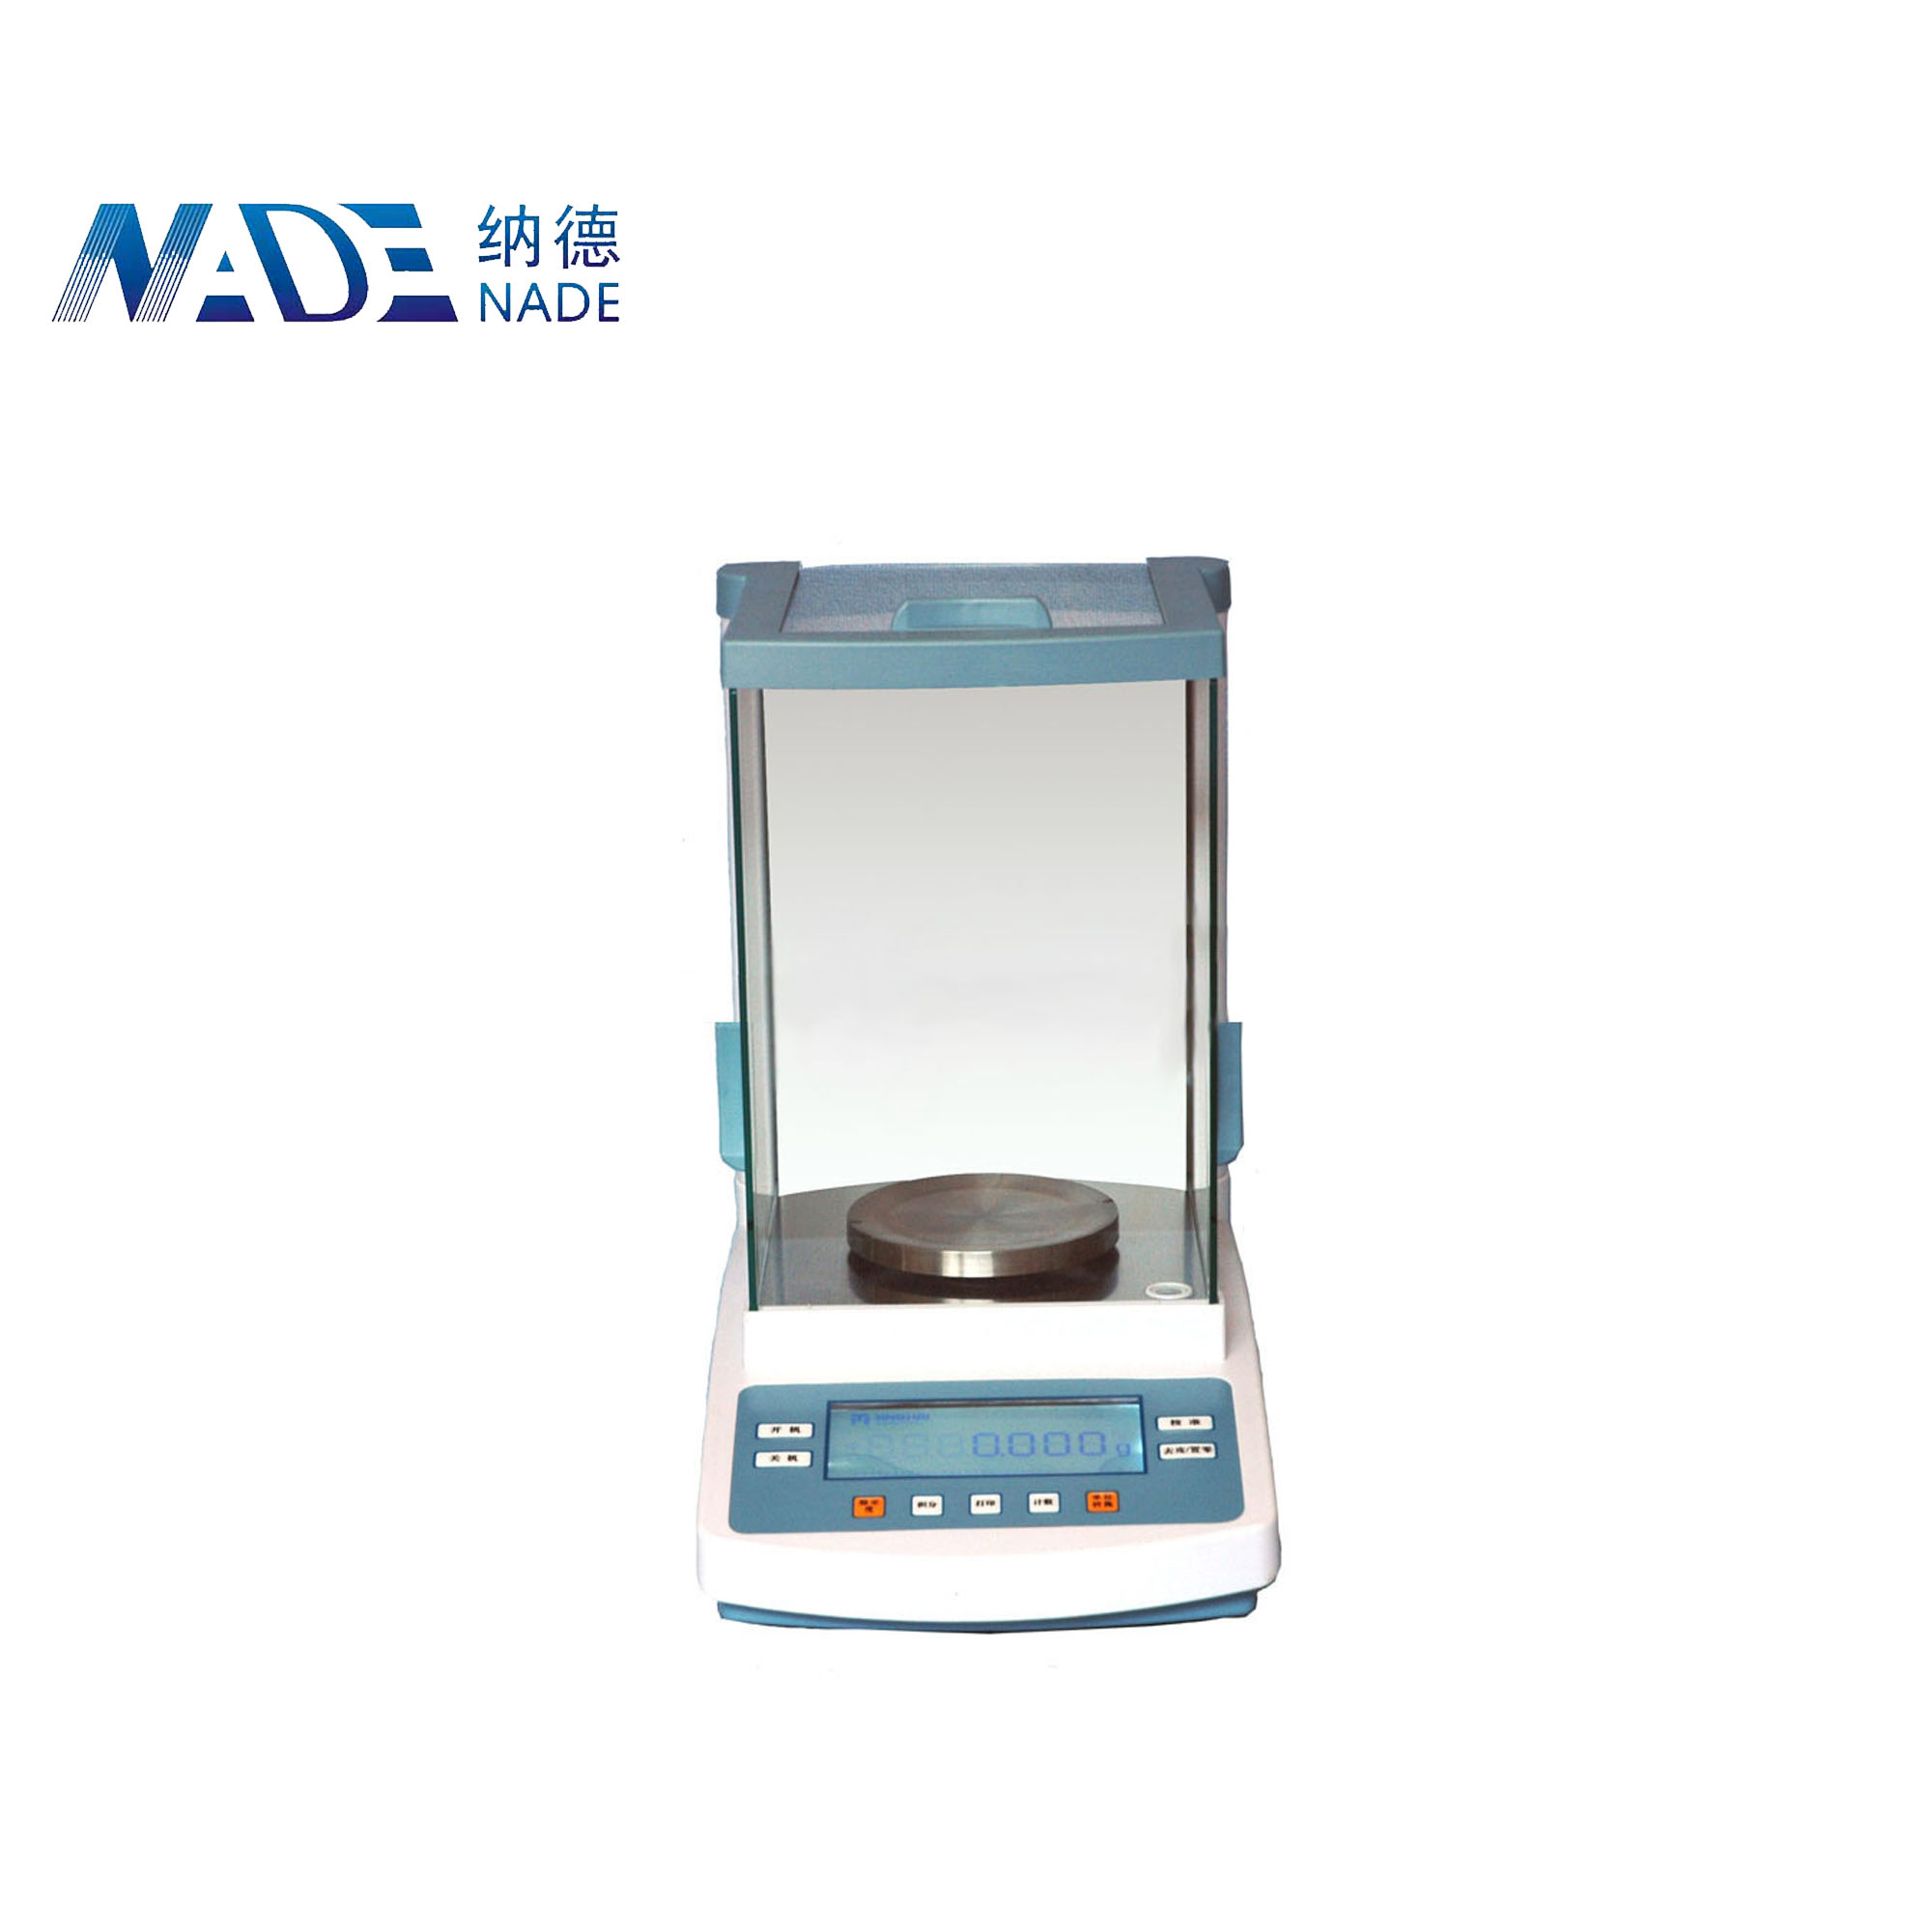 Nade JH Precision electronic balance & analytical balance weight measuring instruments JA2003N 200g/1mg